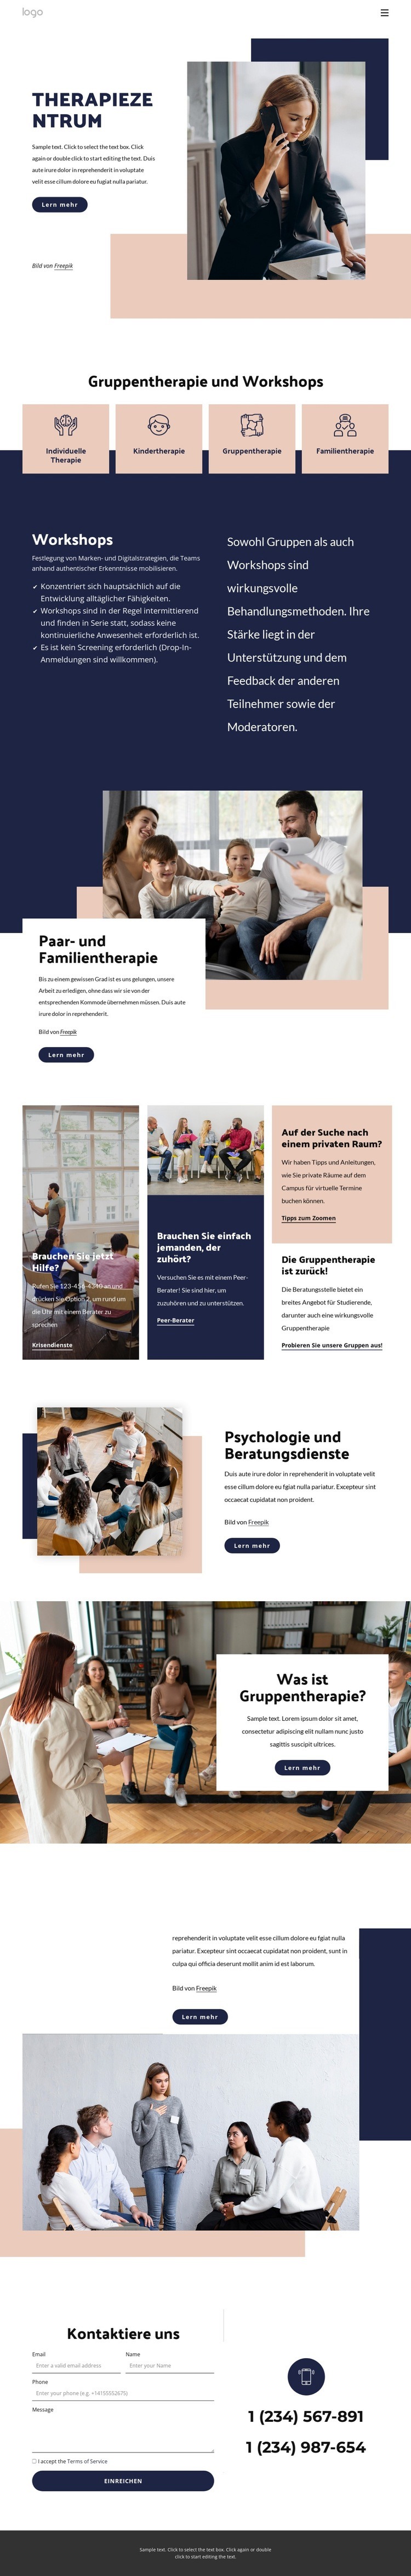 Therapiezentrum Website design